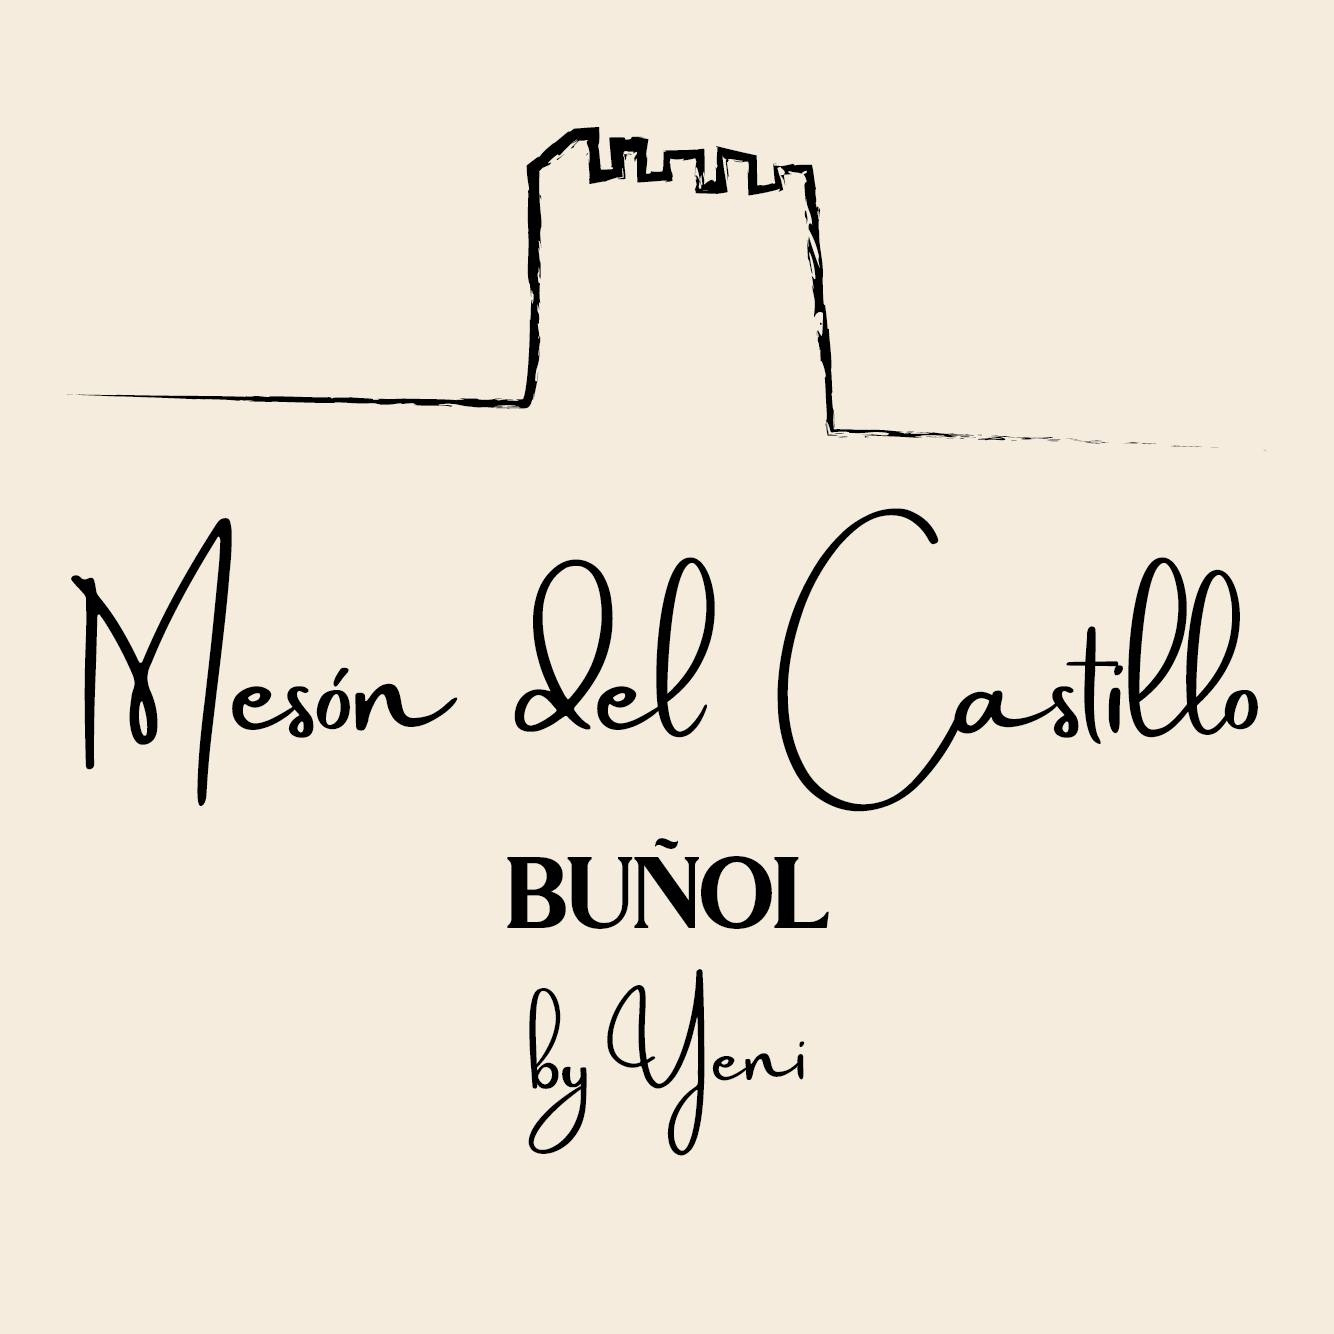 Meson del Castillo Buñol - by Yeni